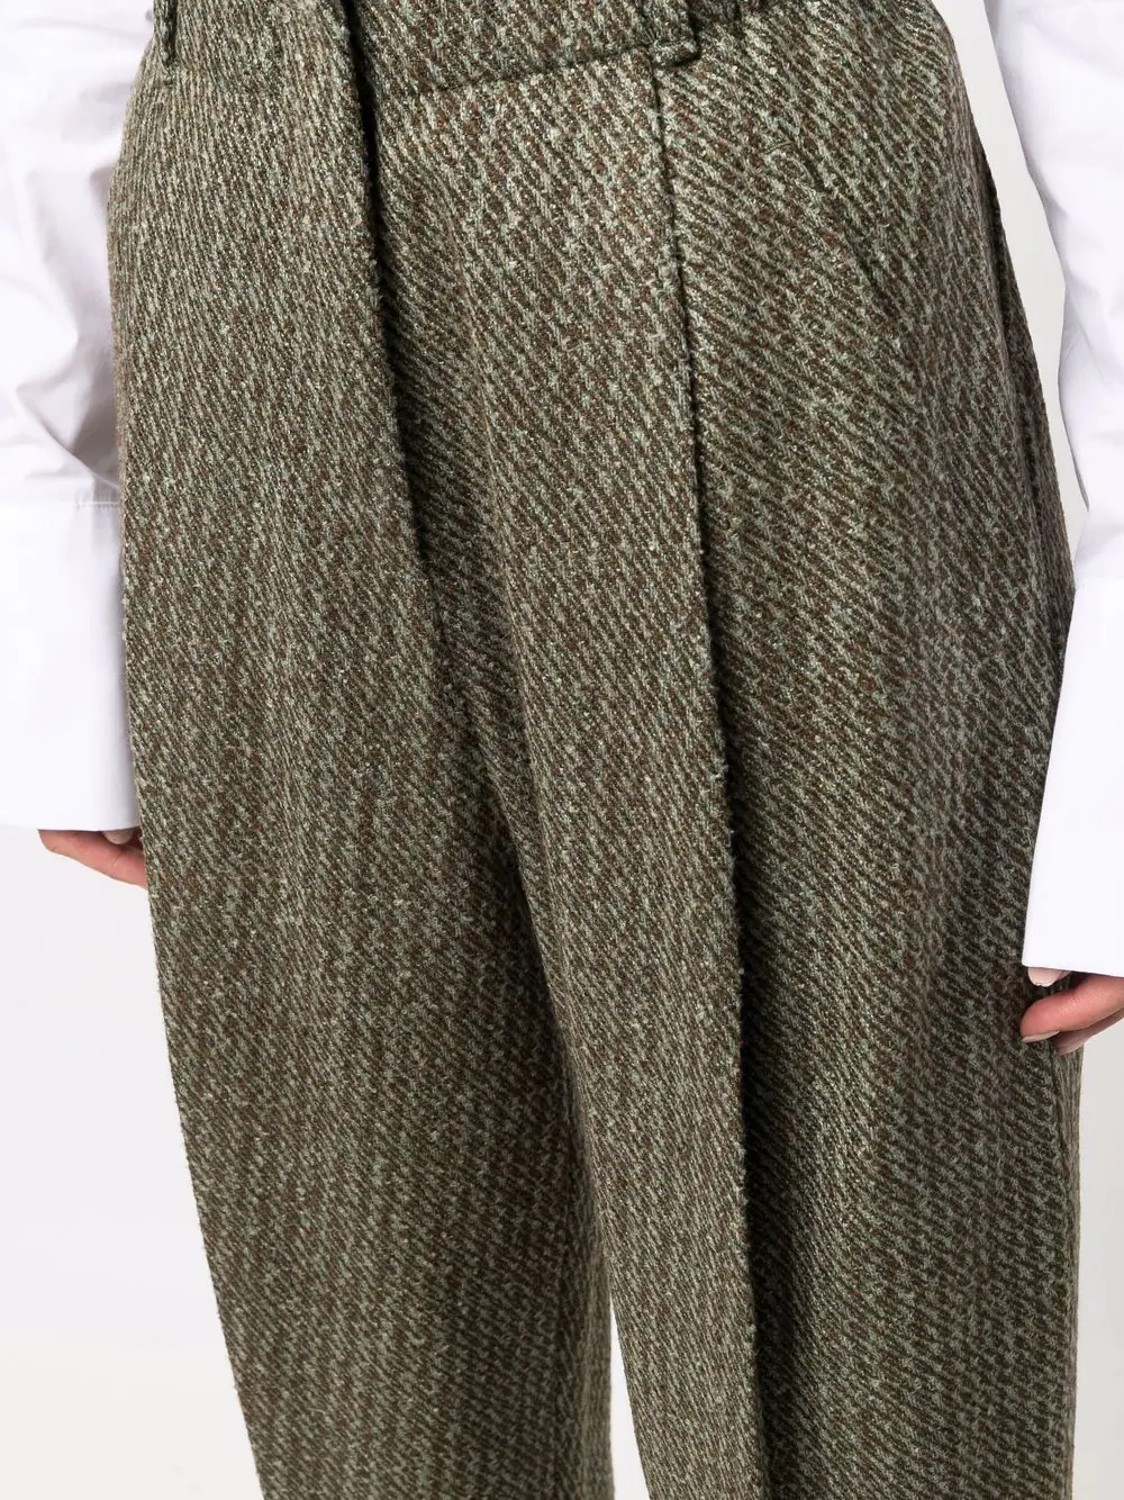 shop Tela  Pantaloni: Pantaloni Tela, vita alta, fit regolare, tasche laterali, stretto infondo, in tweed.

Composizione: 100% lana. number 2223